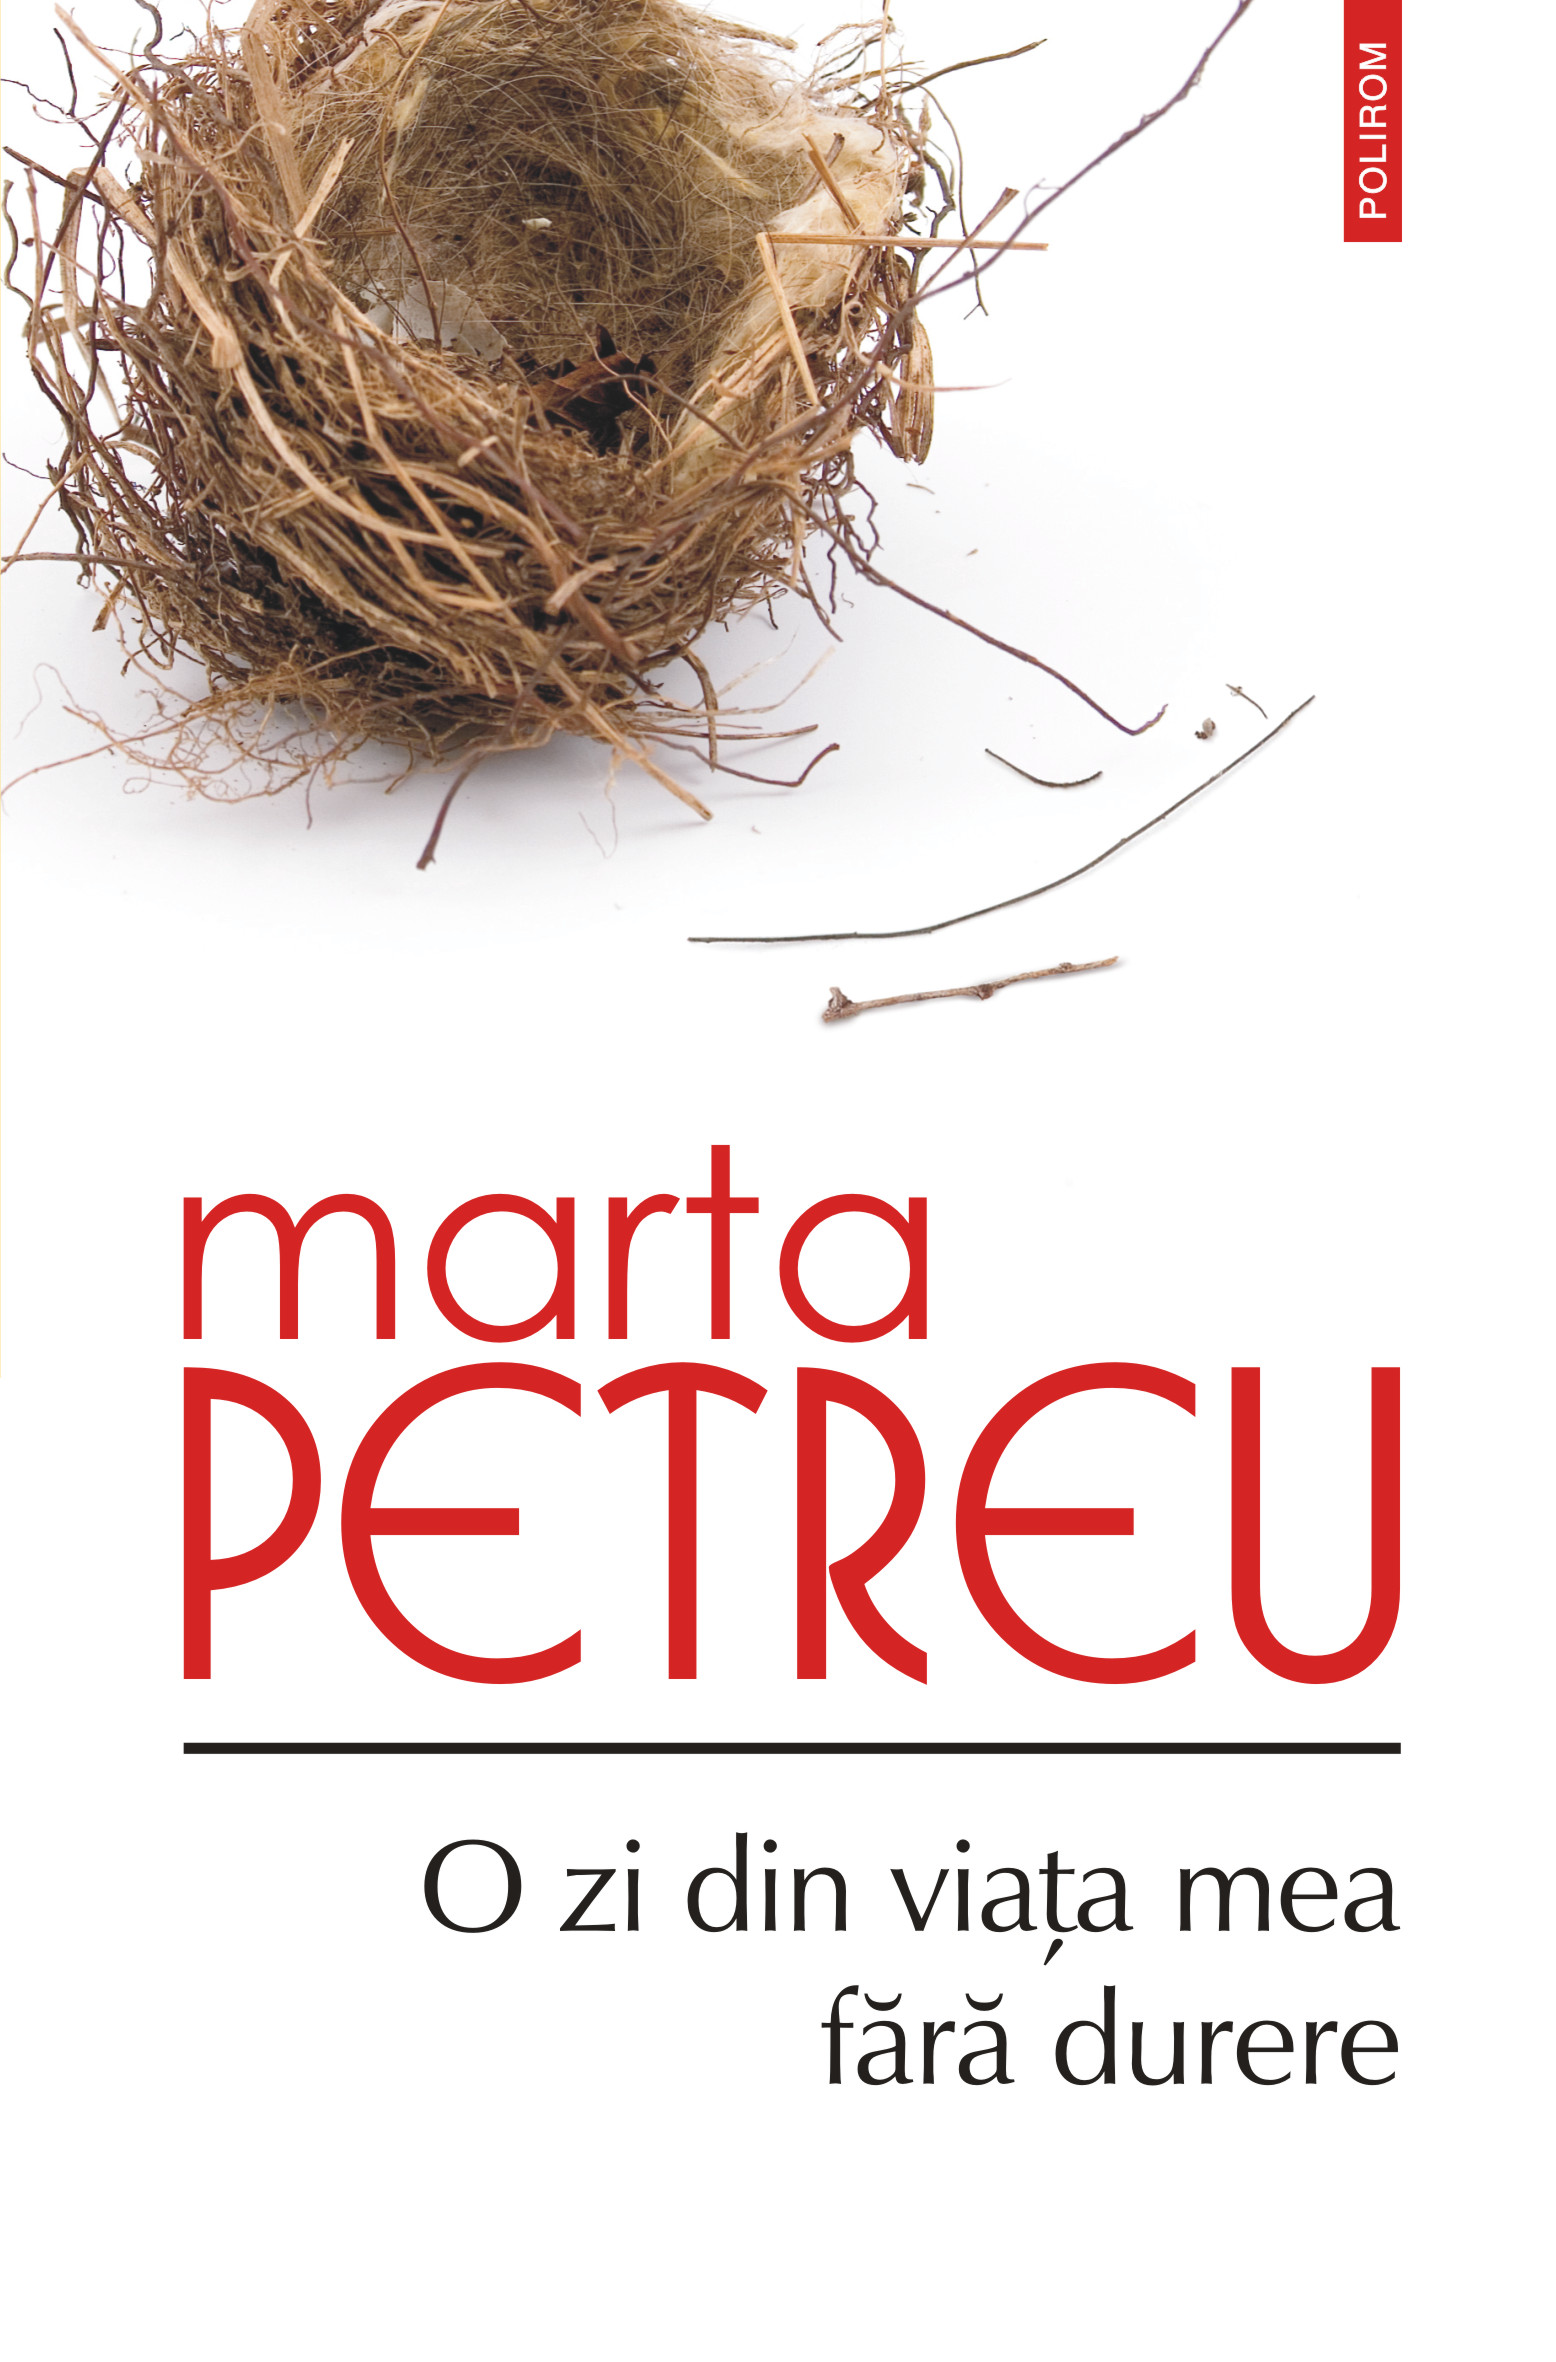 eBook O zi din viata mea fara durere - Marta Petreu